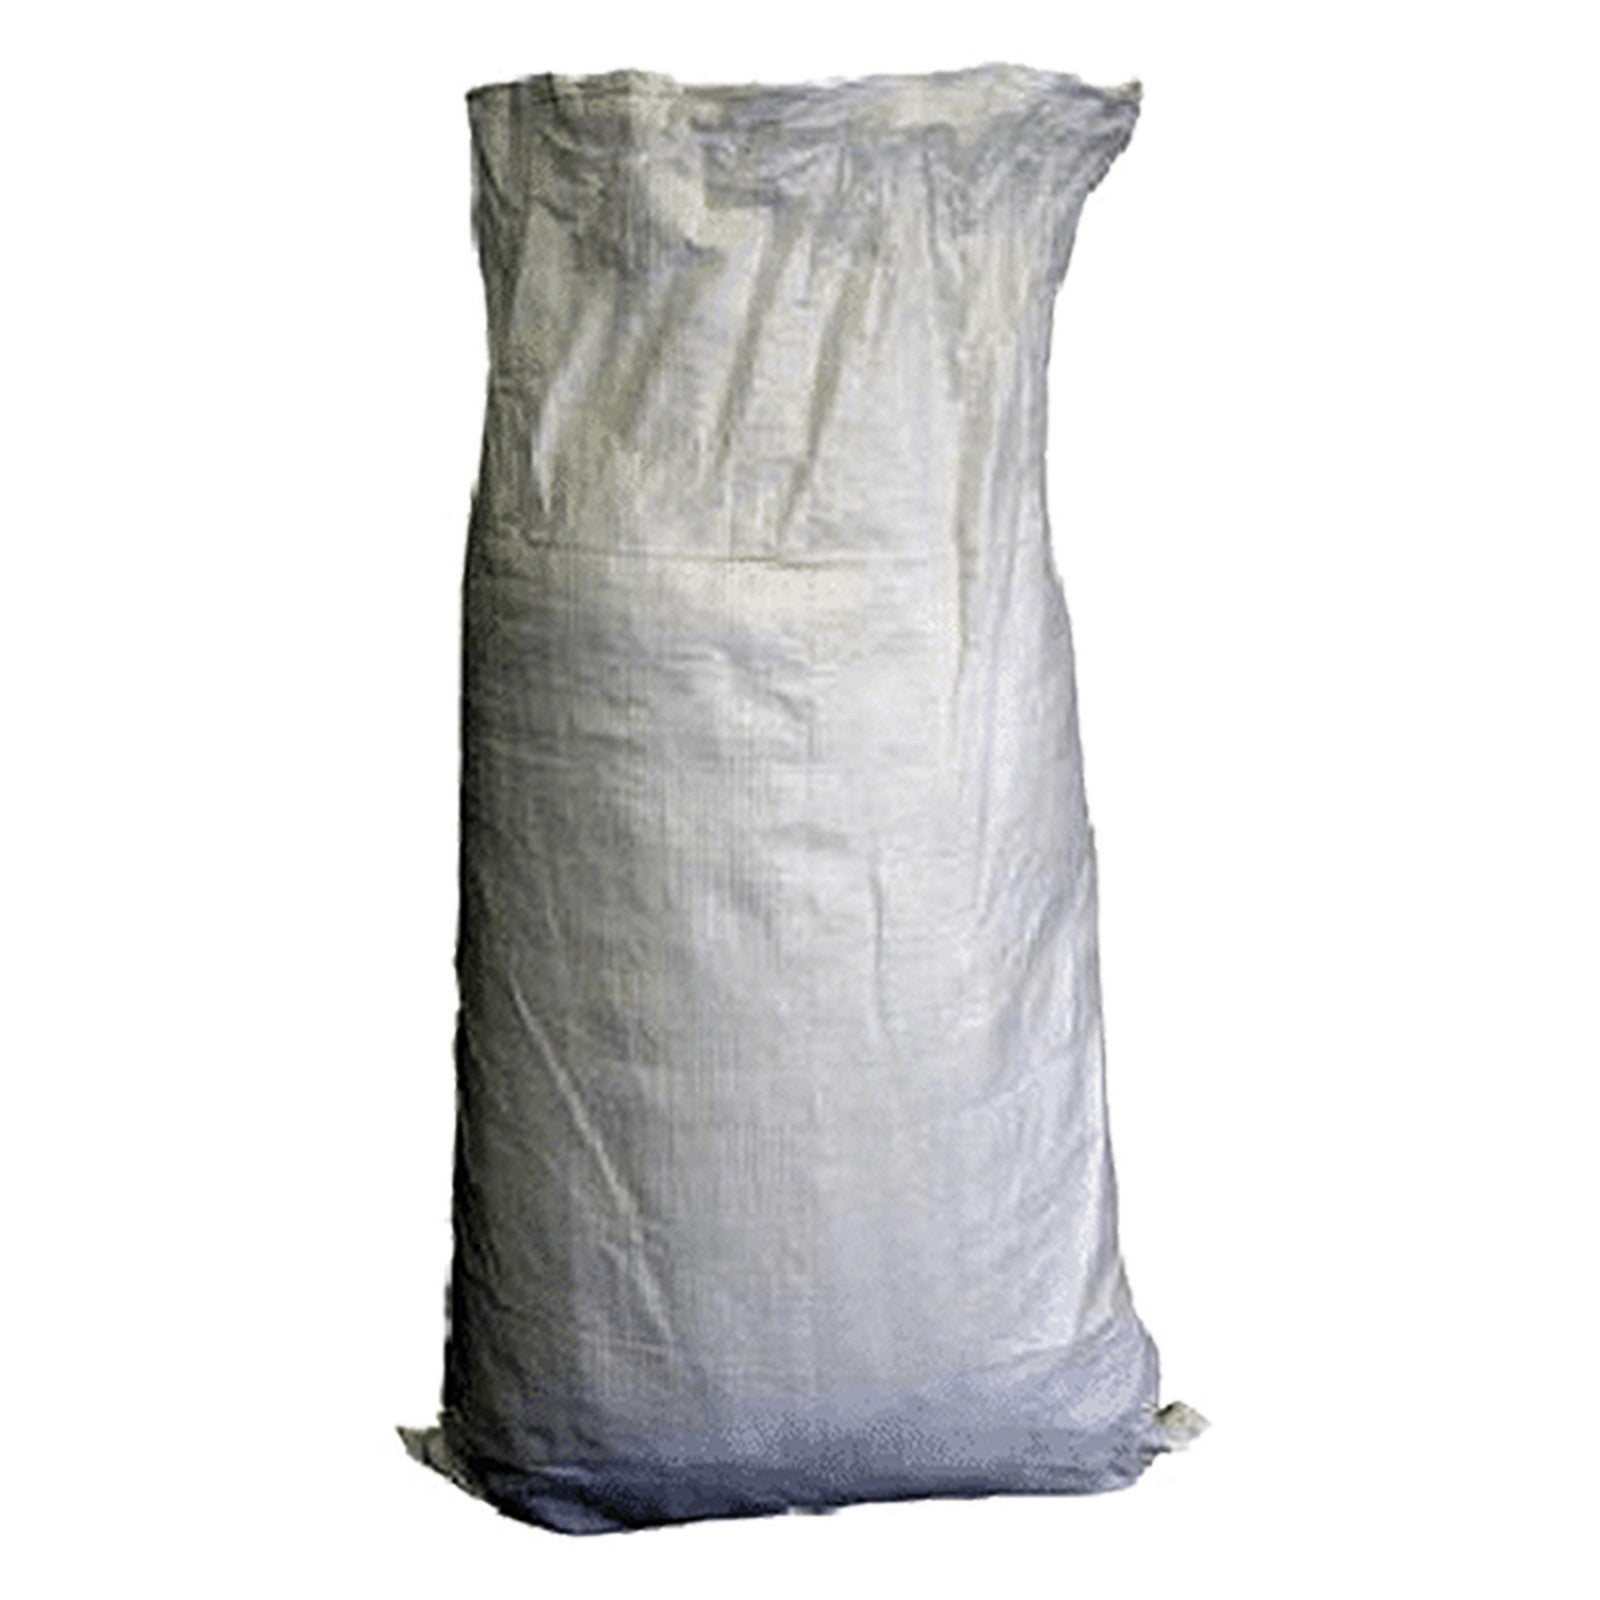 50pz sacco in polipropilene cm 35 x 50 bianco - 10 kg circa cod:ferx.606743nlm